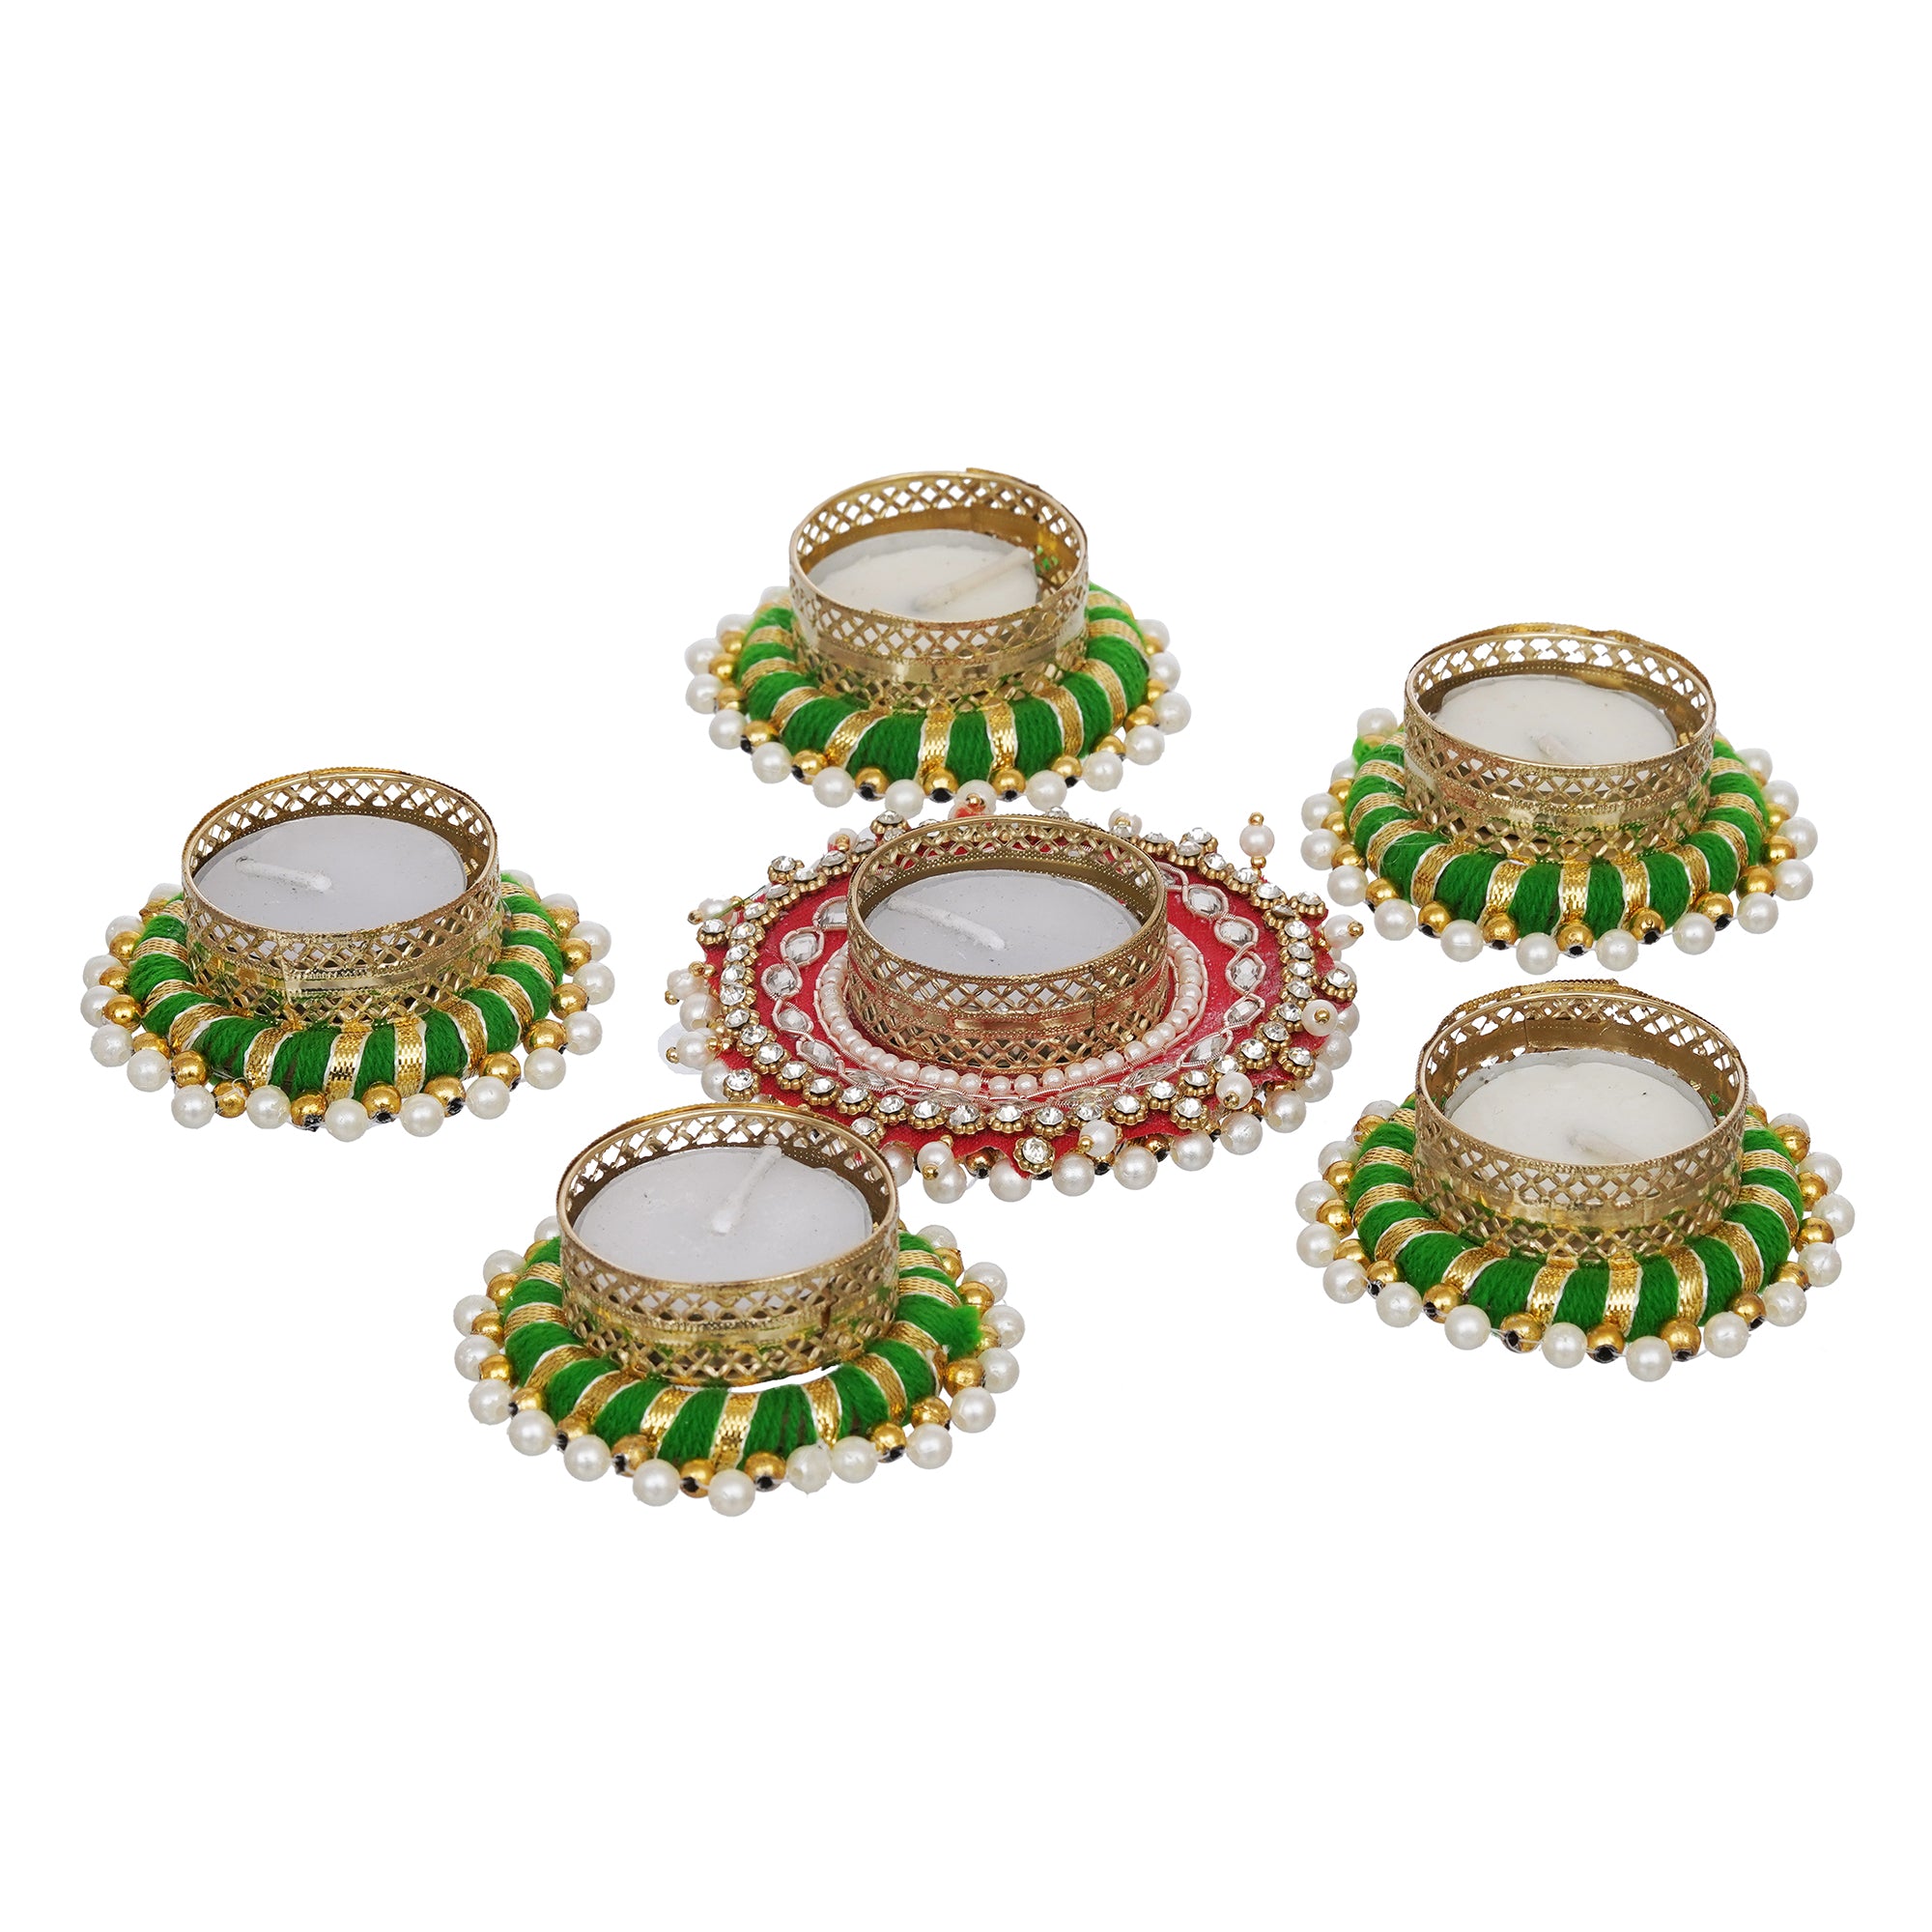 eCraftIndia Set of 7 Round Shaped Diamond Beads and Pearls Decorative Tea Light Candle Holders 6